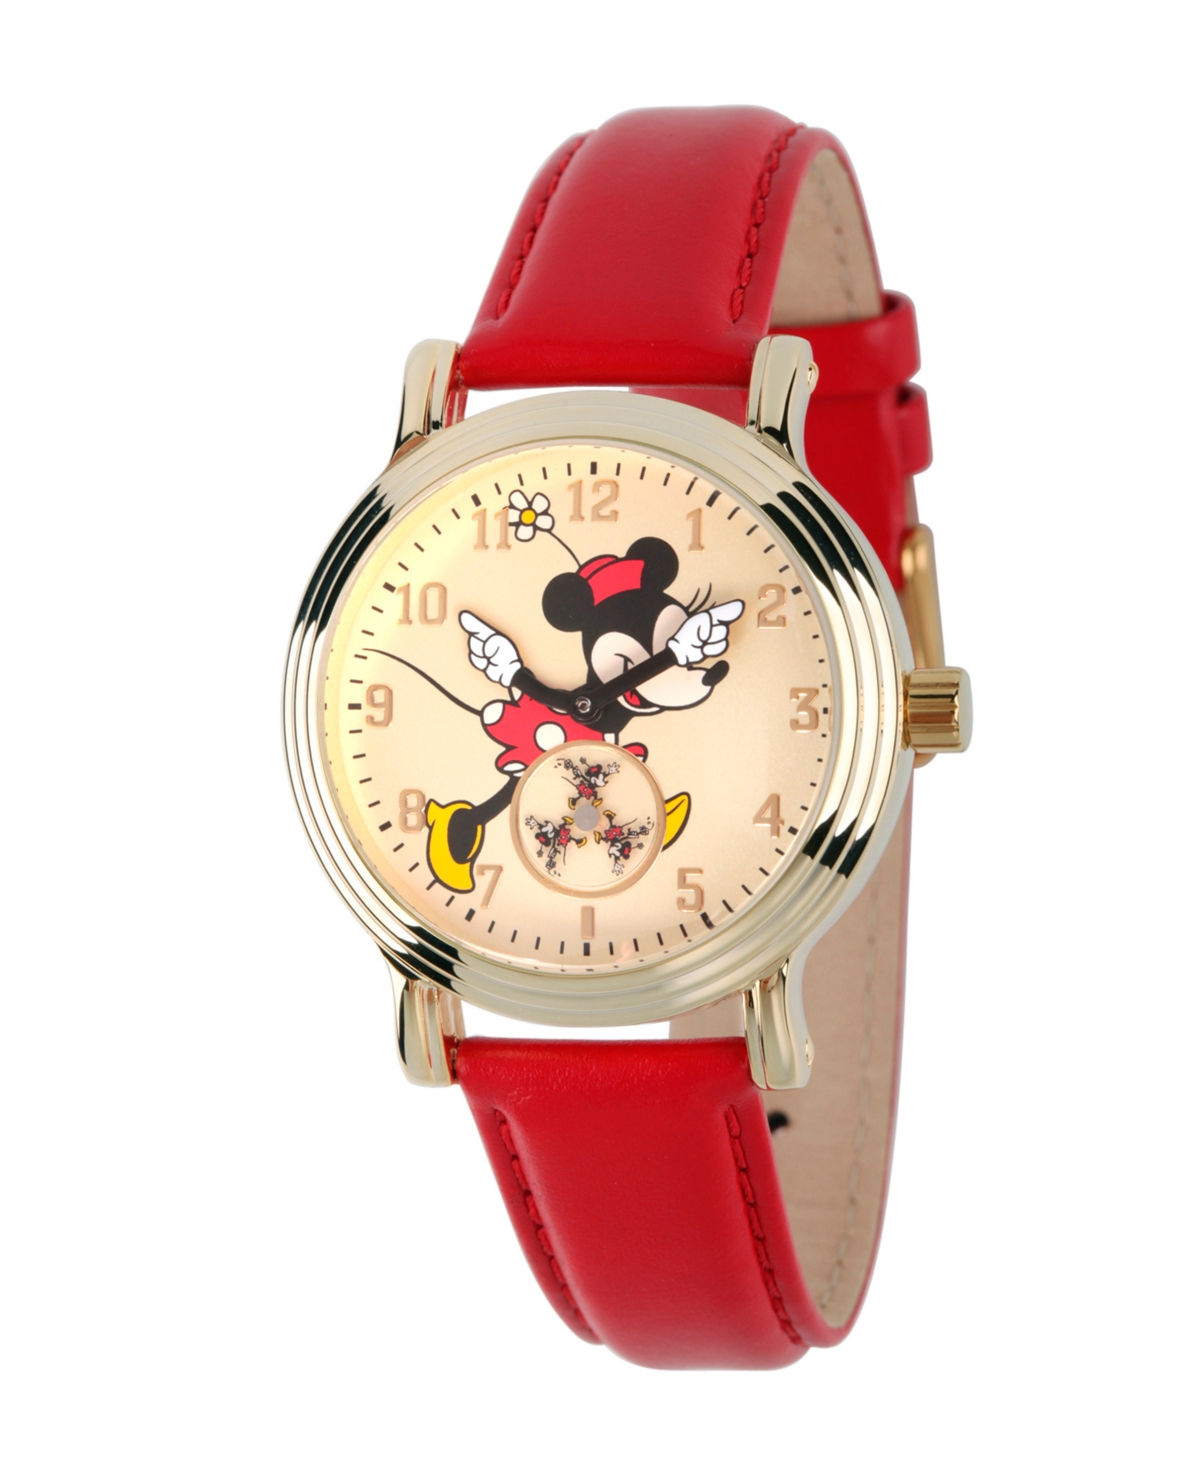 Ewatchfactory Disney Minnie Mouse Women's Gold Vintage Alloy Watch